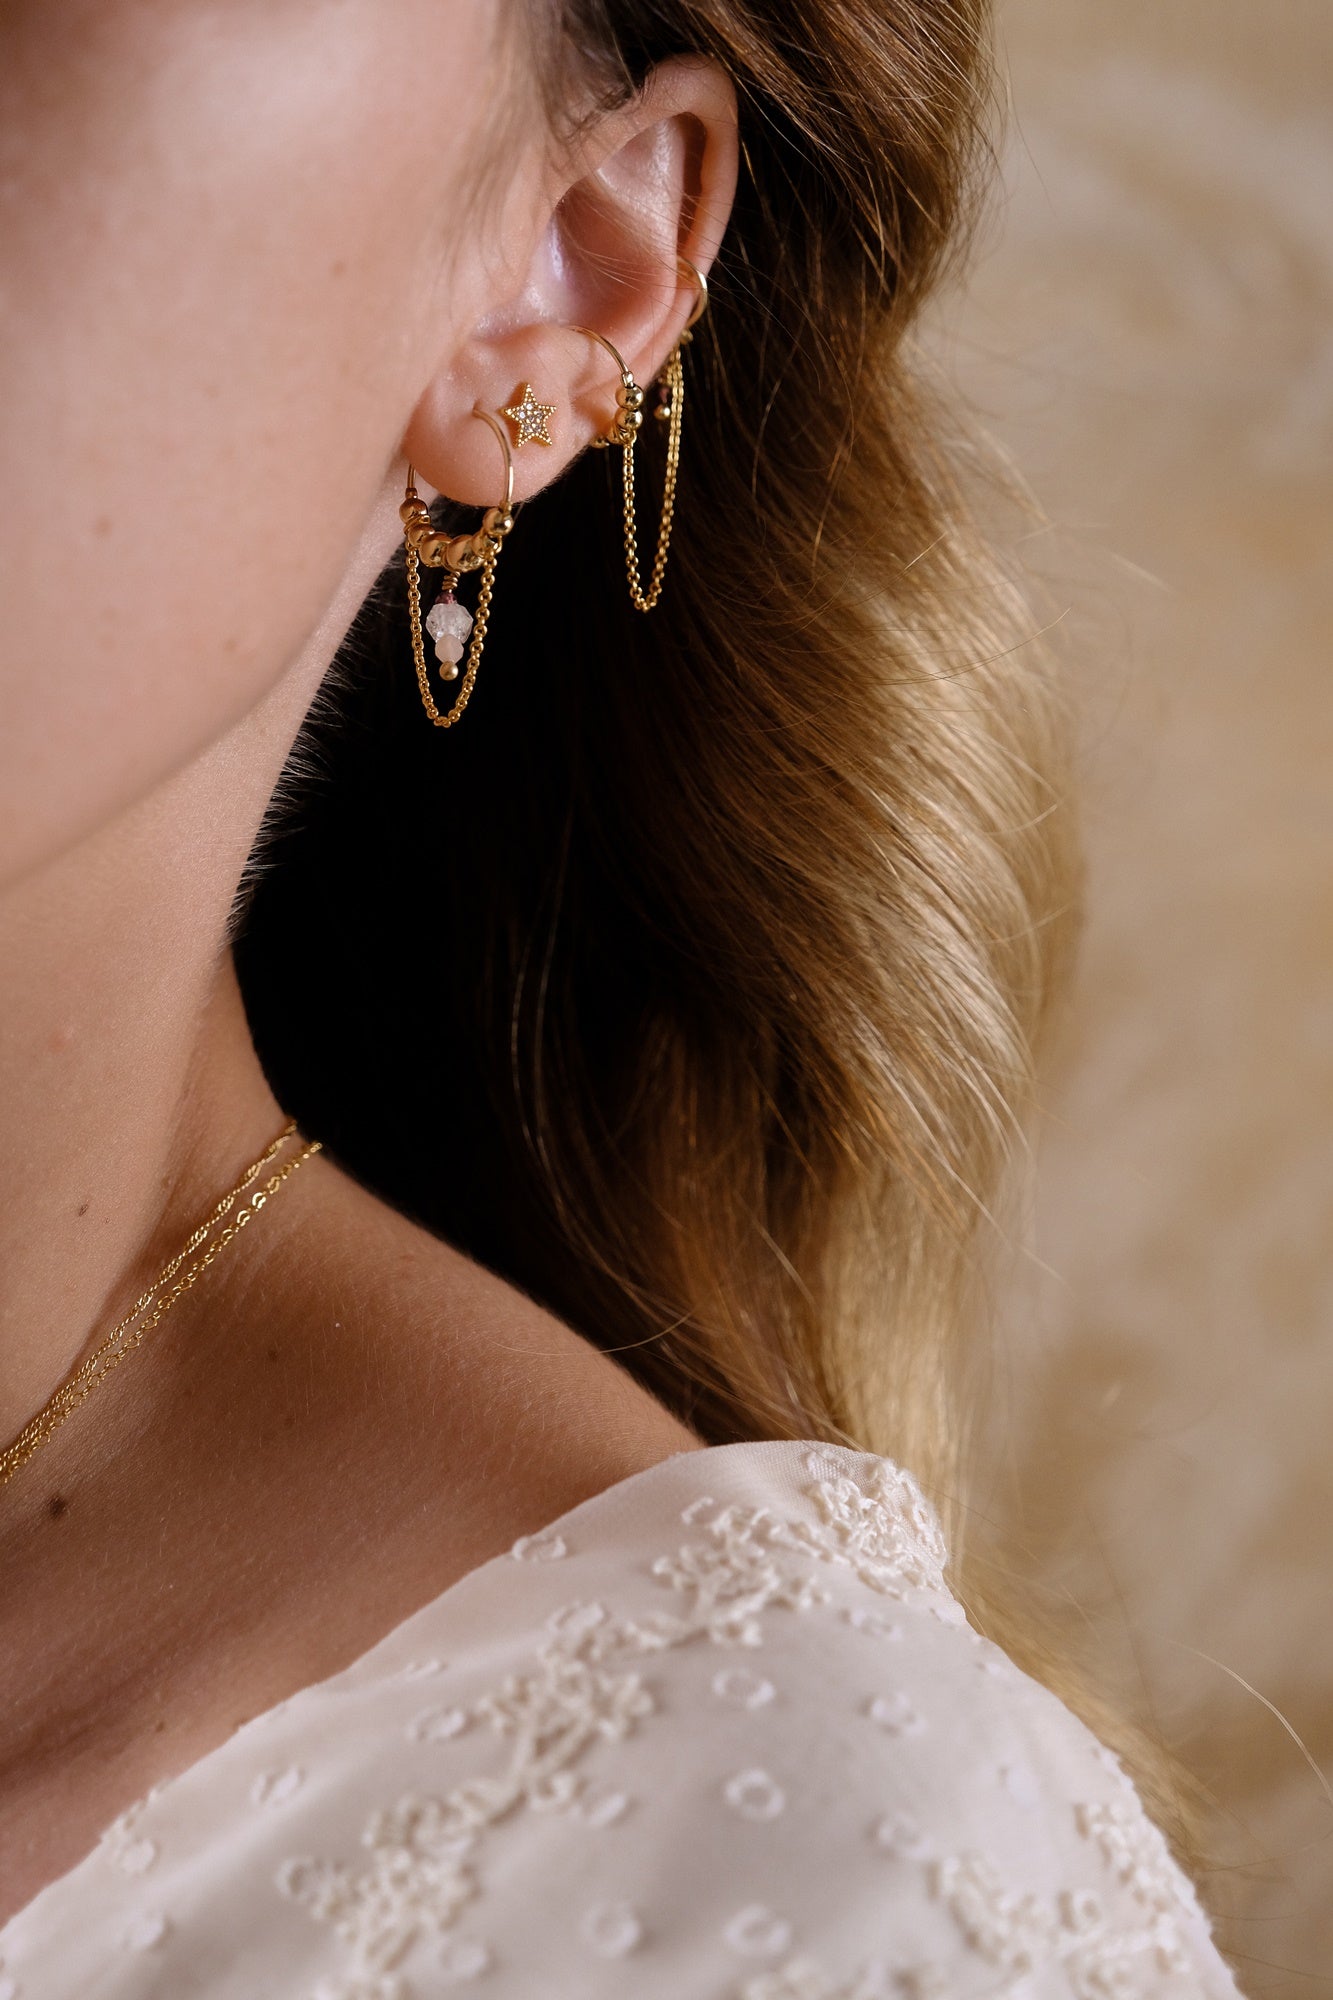 “Aster” earrings